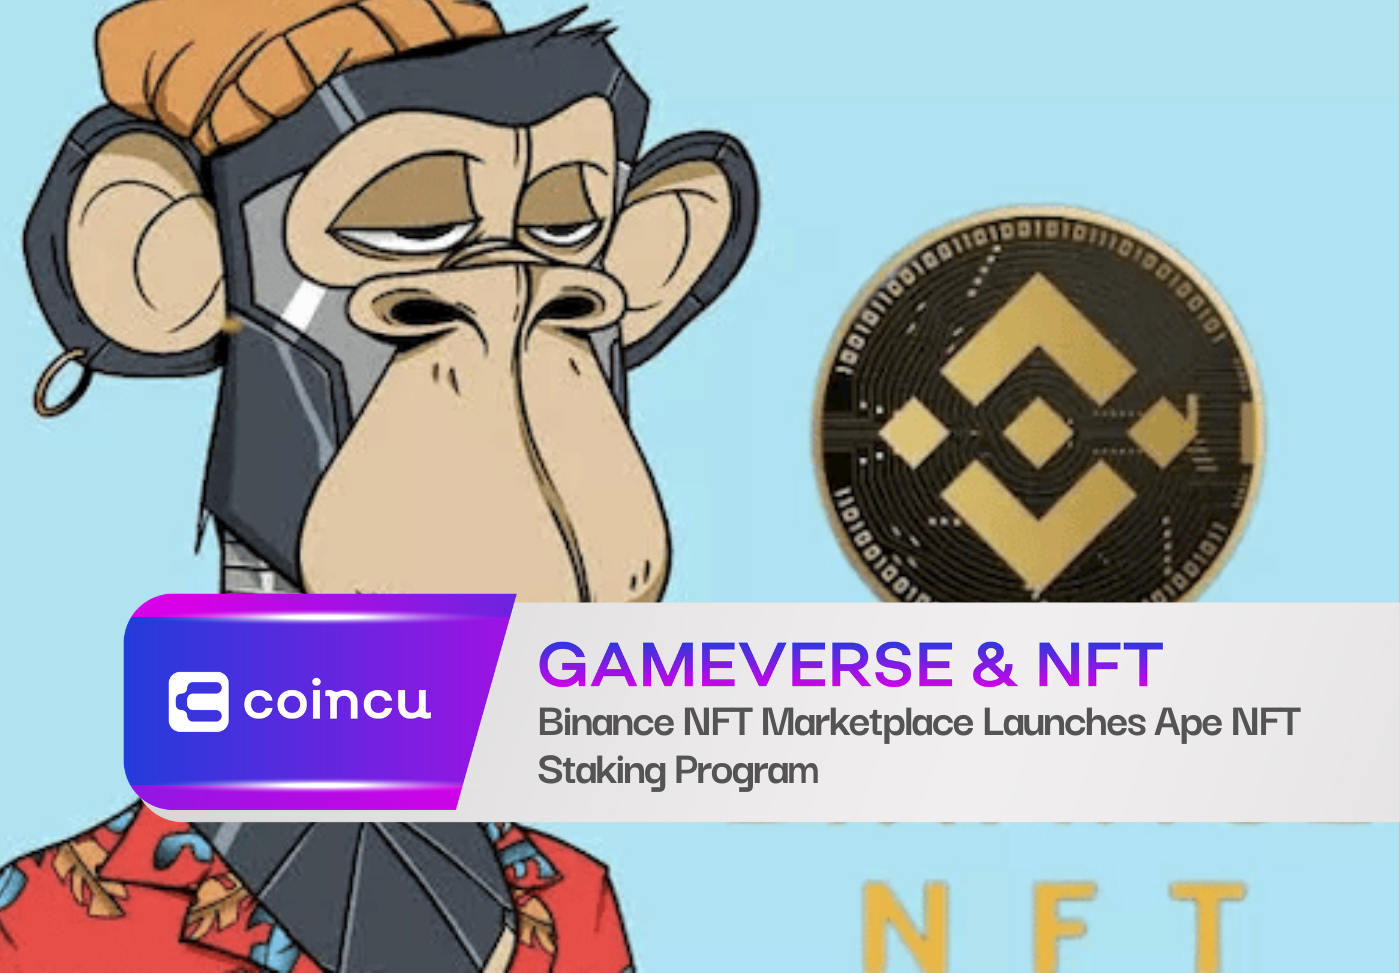 Binance NFT Marketplace Launches Ape NFT Staking Program